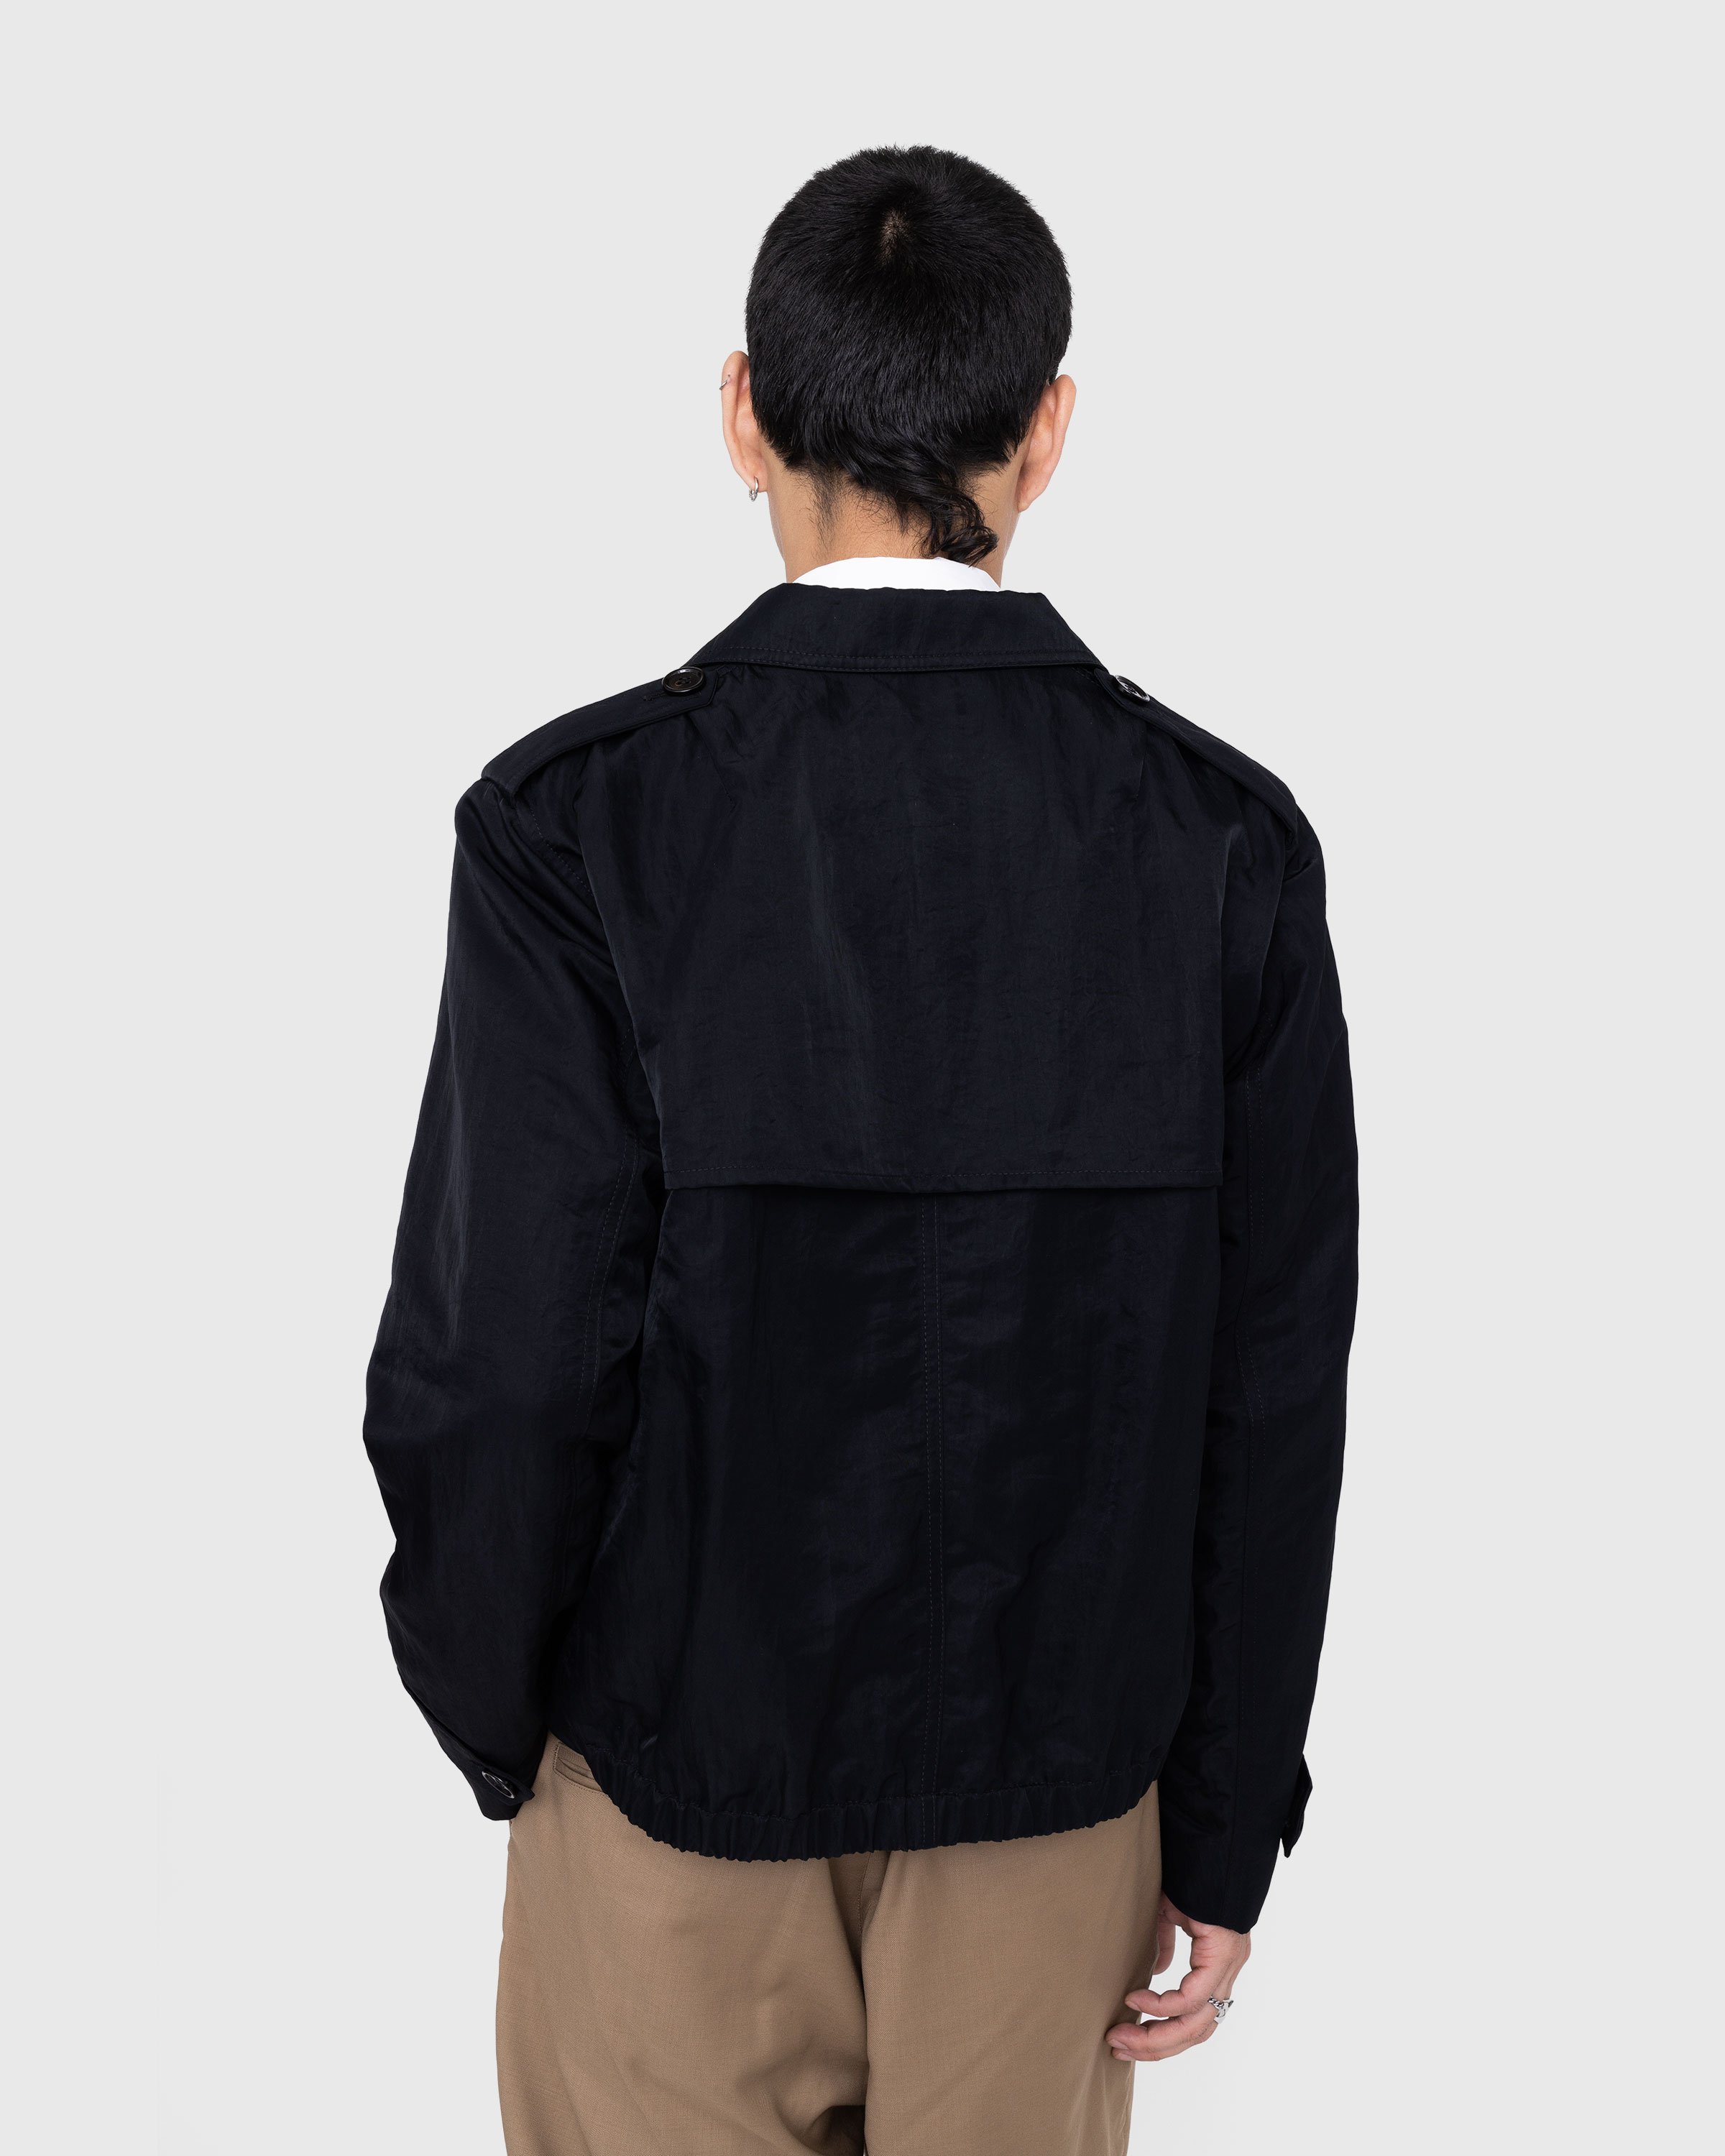 Dries van Noten - Vallow Jacket Black - Clothing - Black - Image 3